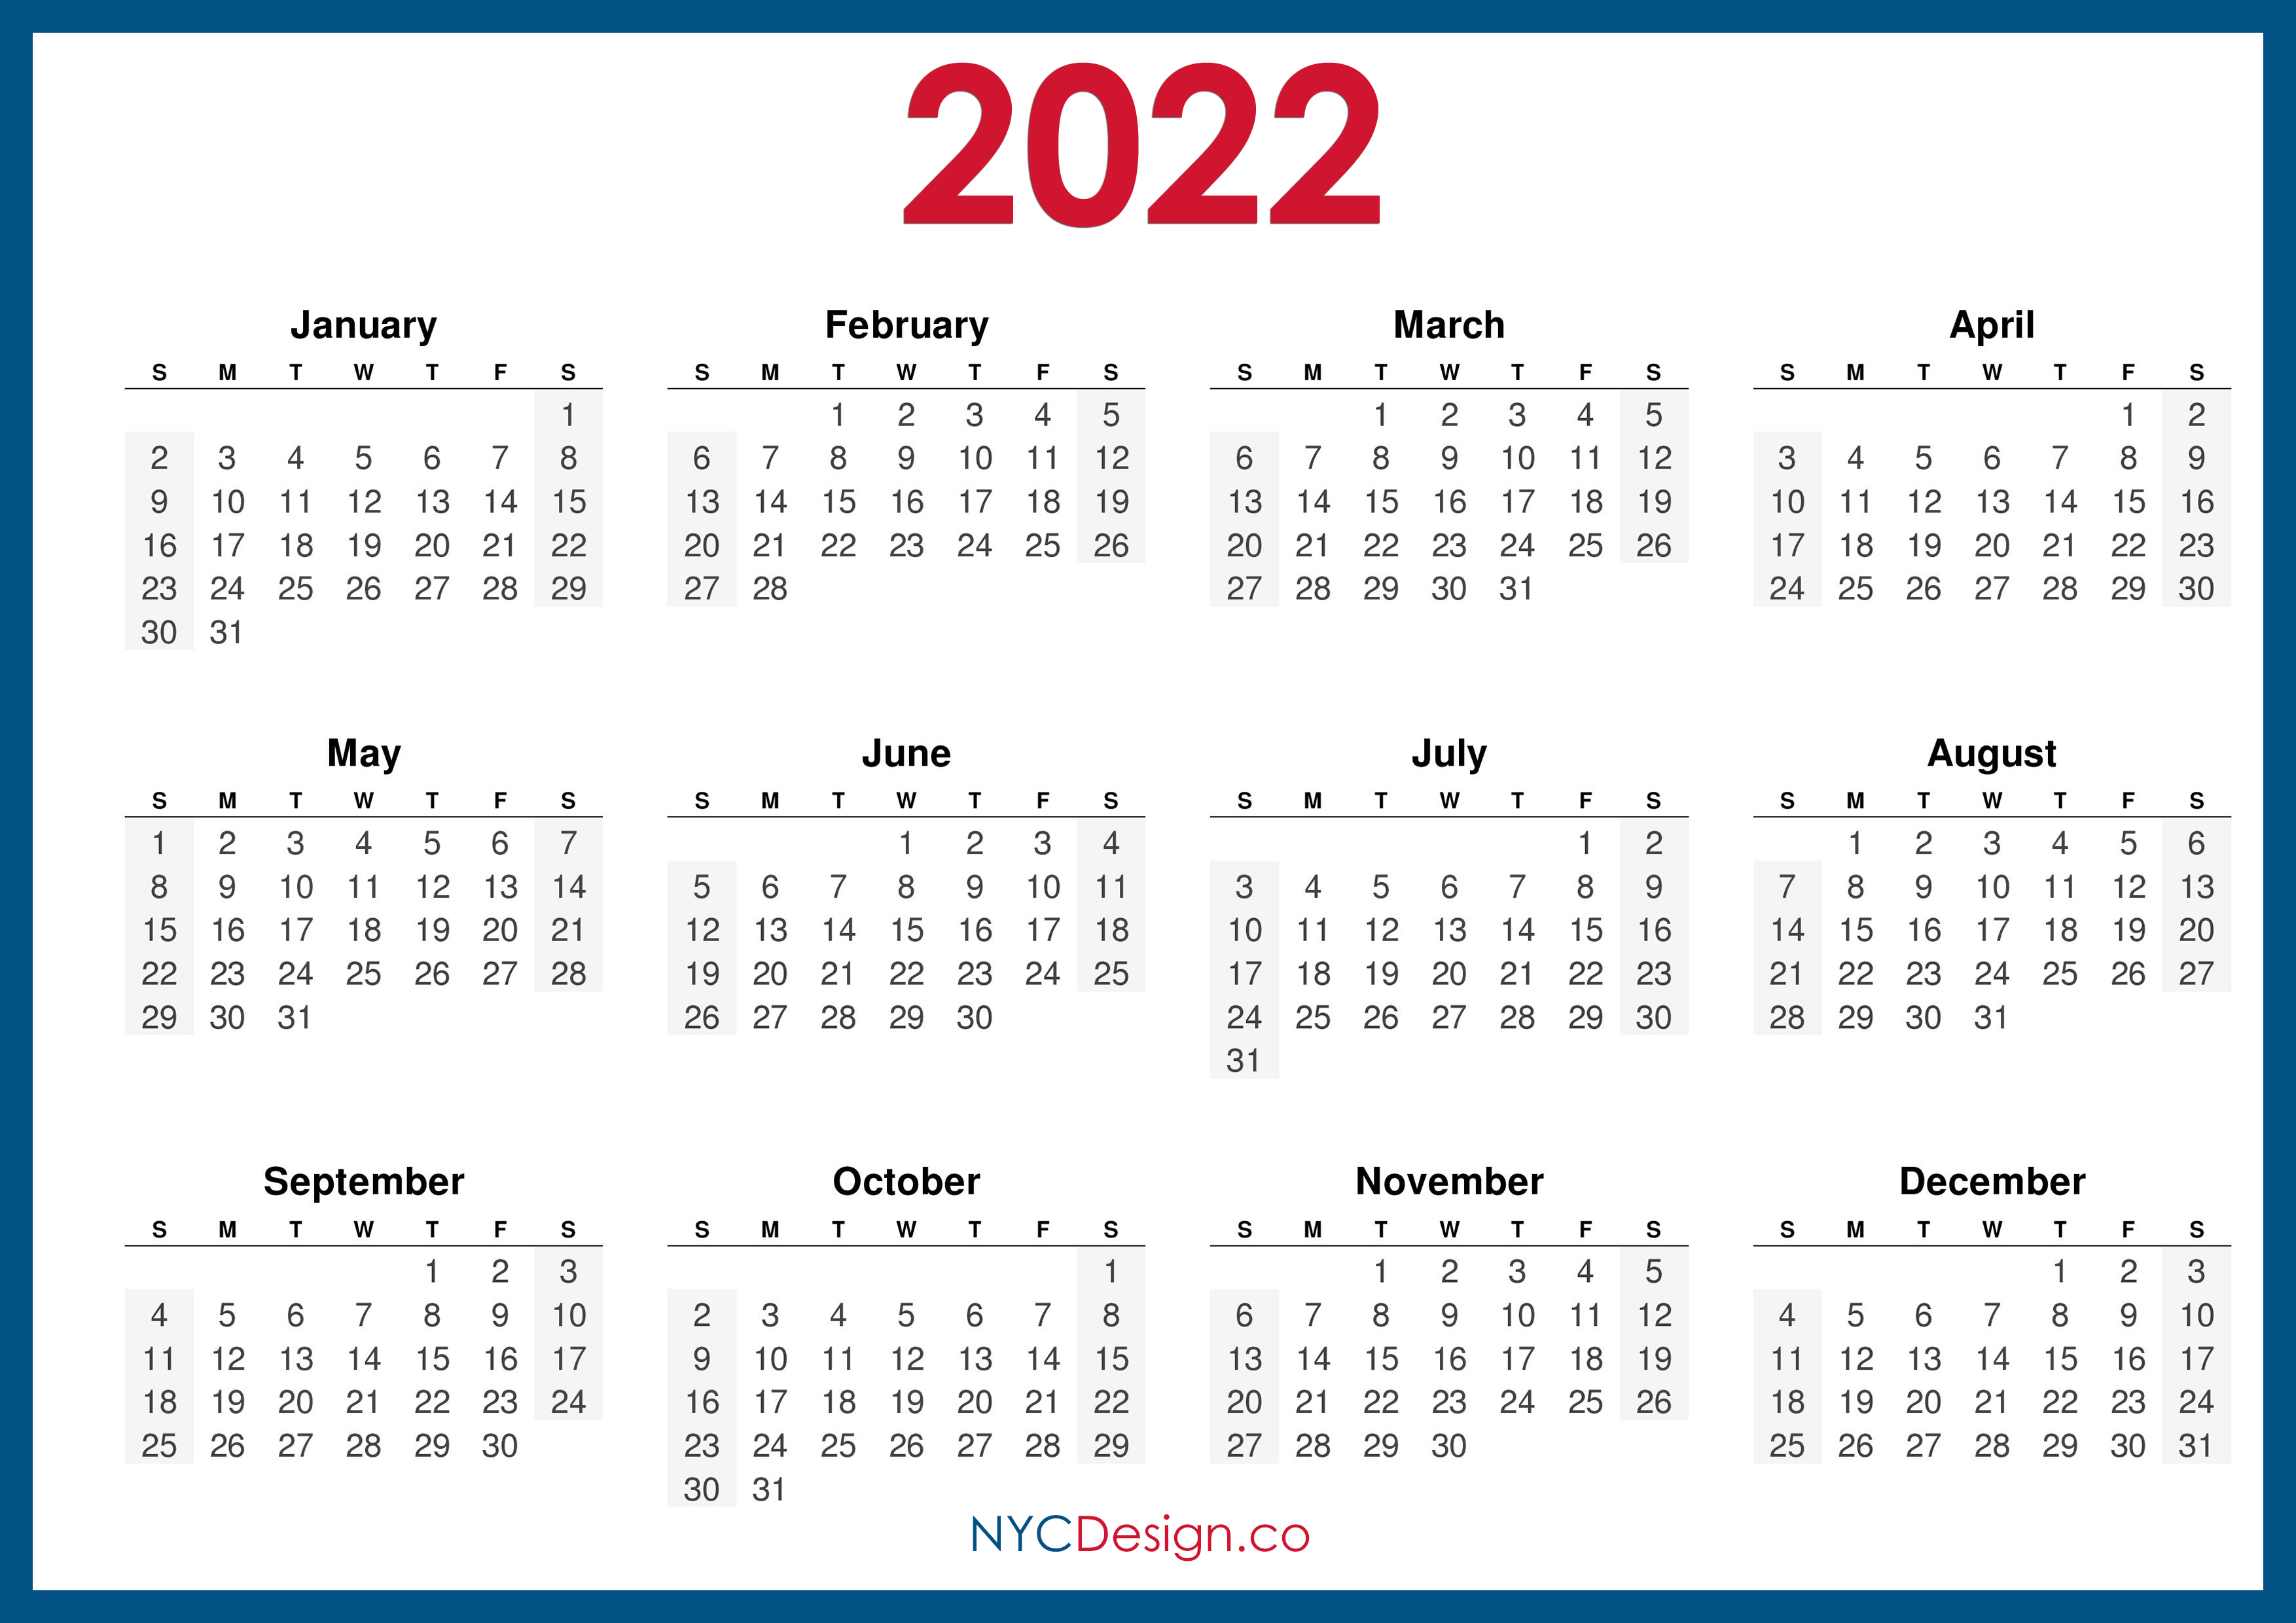 2022 calendar pdf download